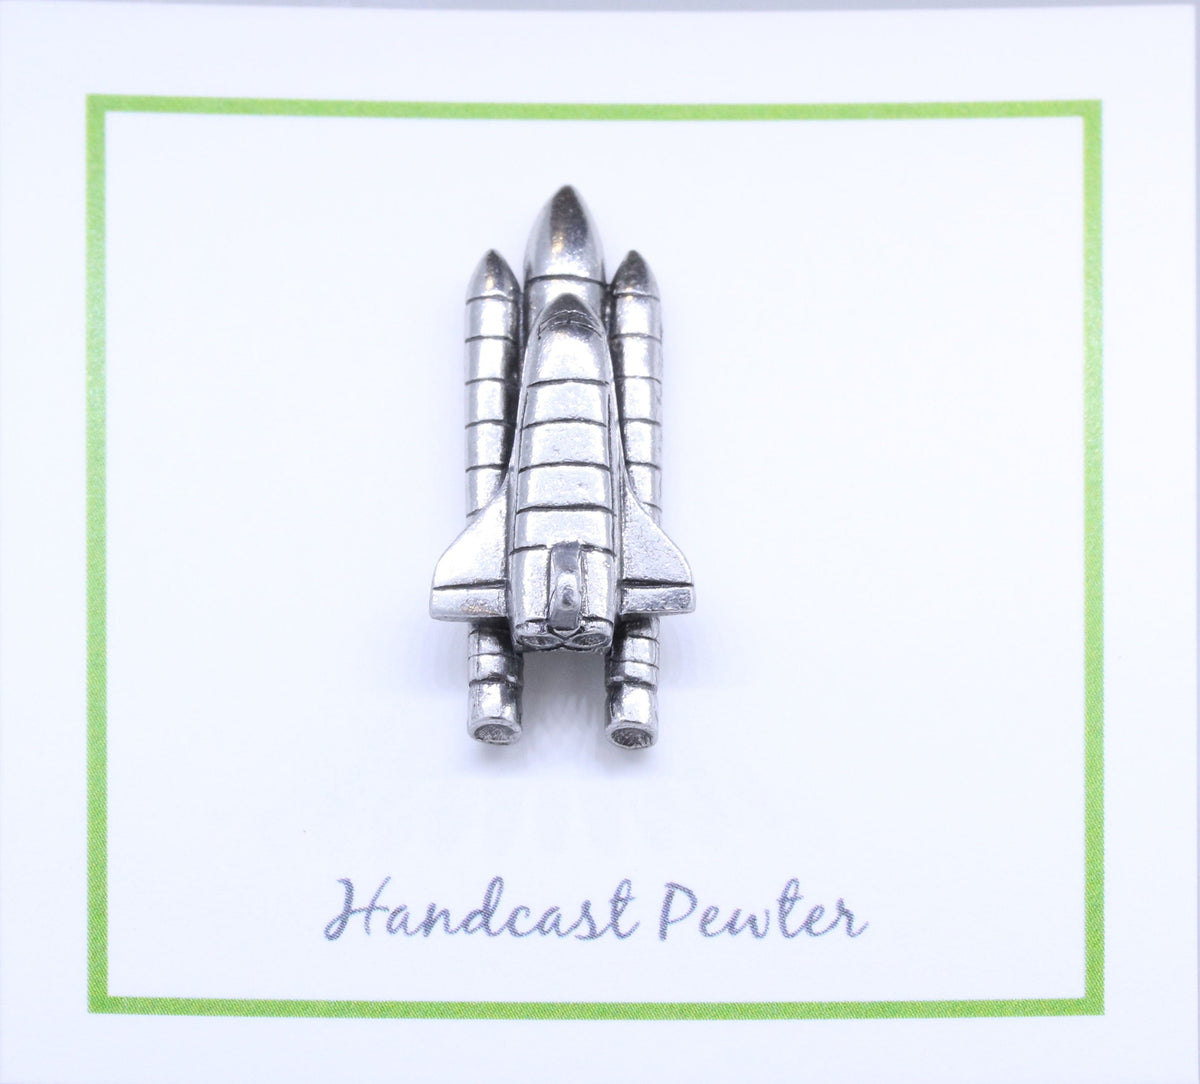 Lover Enamel Pin Set by skystronaut — Kickstarter